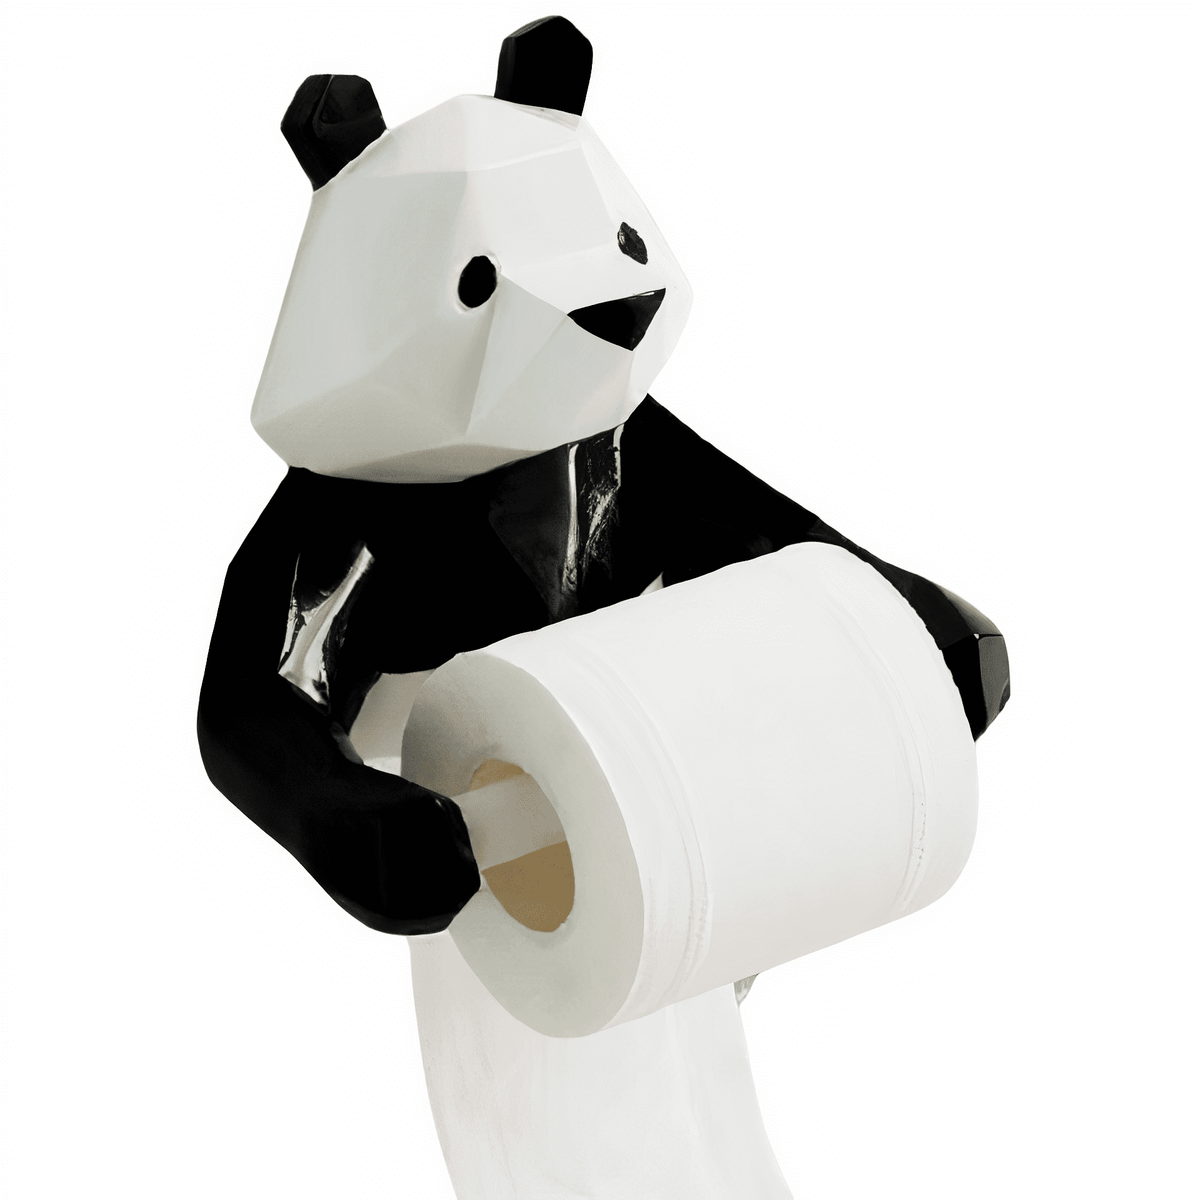 Porte Rouleau Papier Toilette Mural Original - Statuette Panda